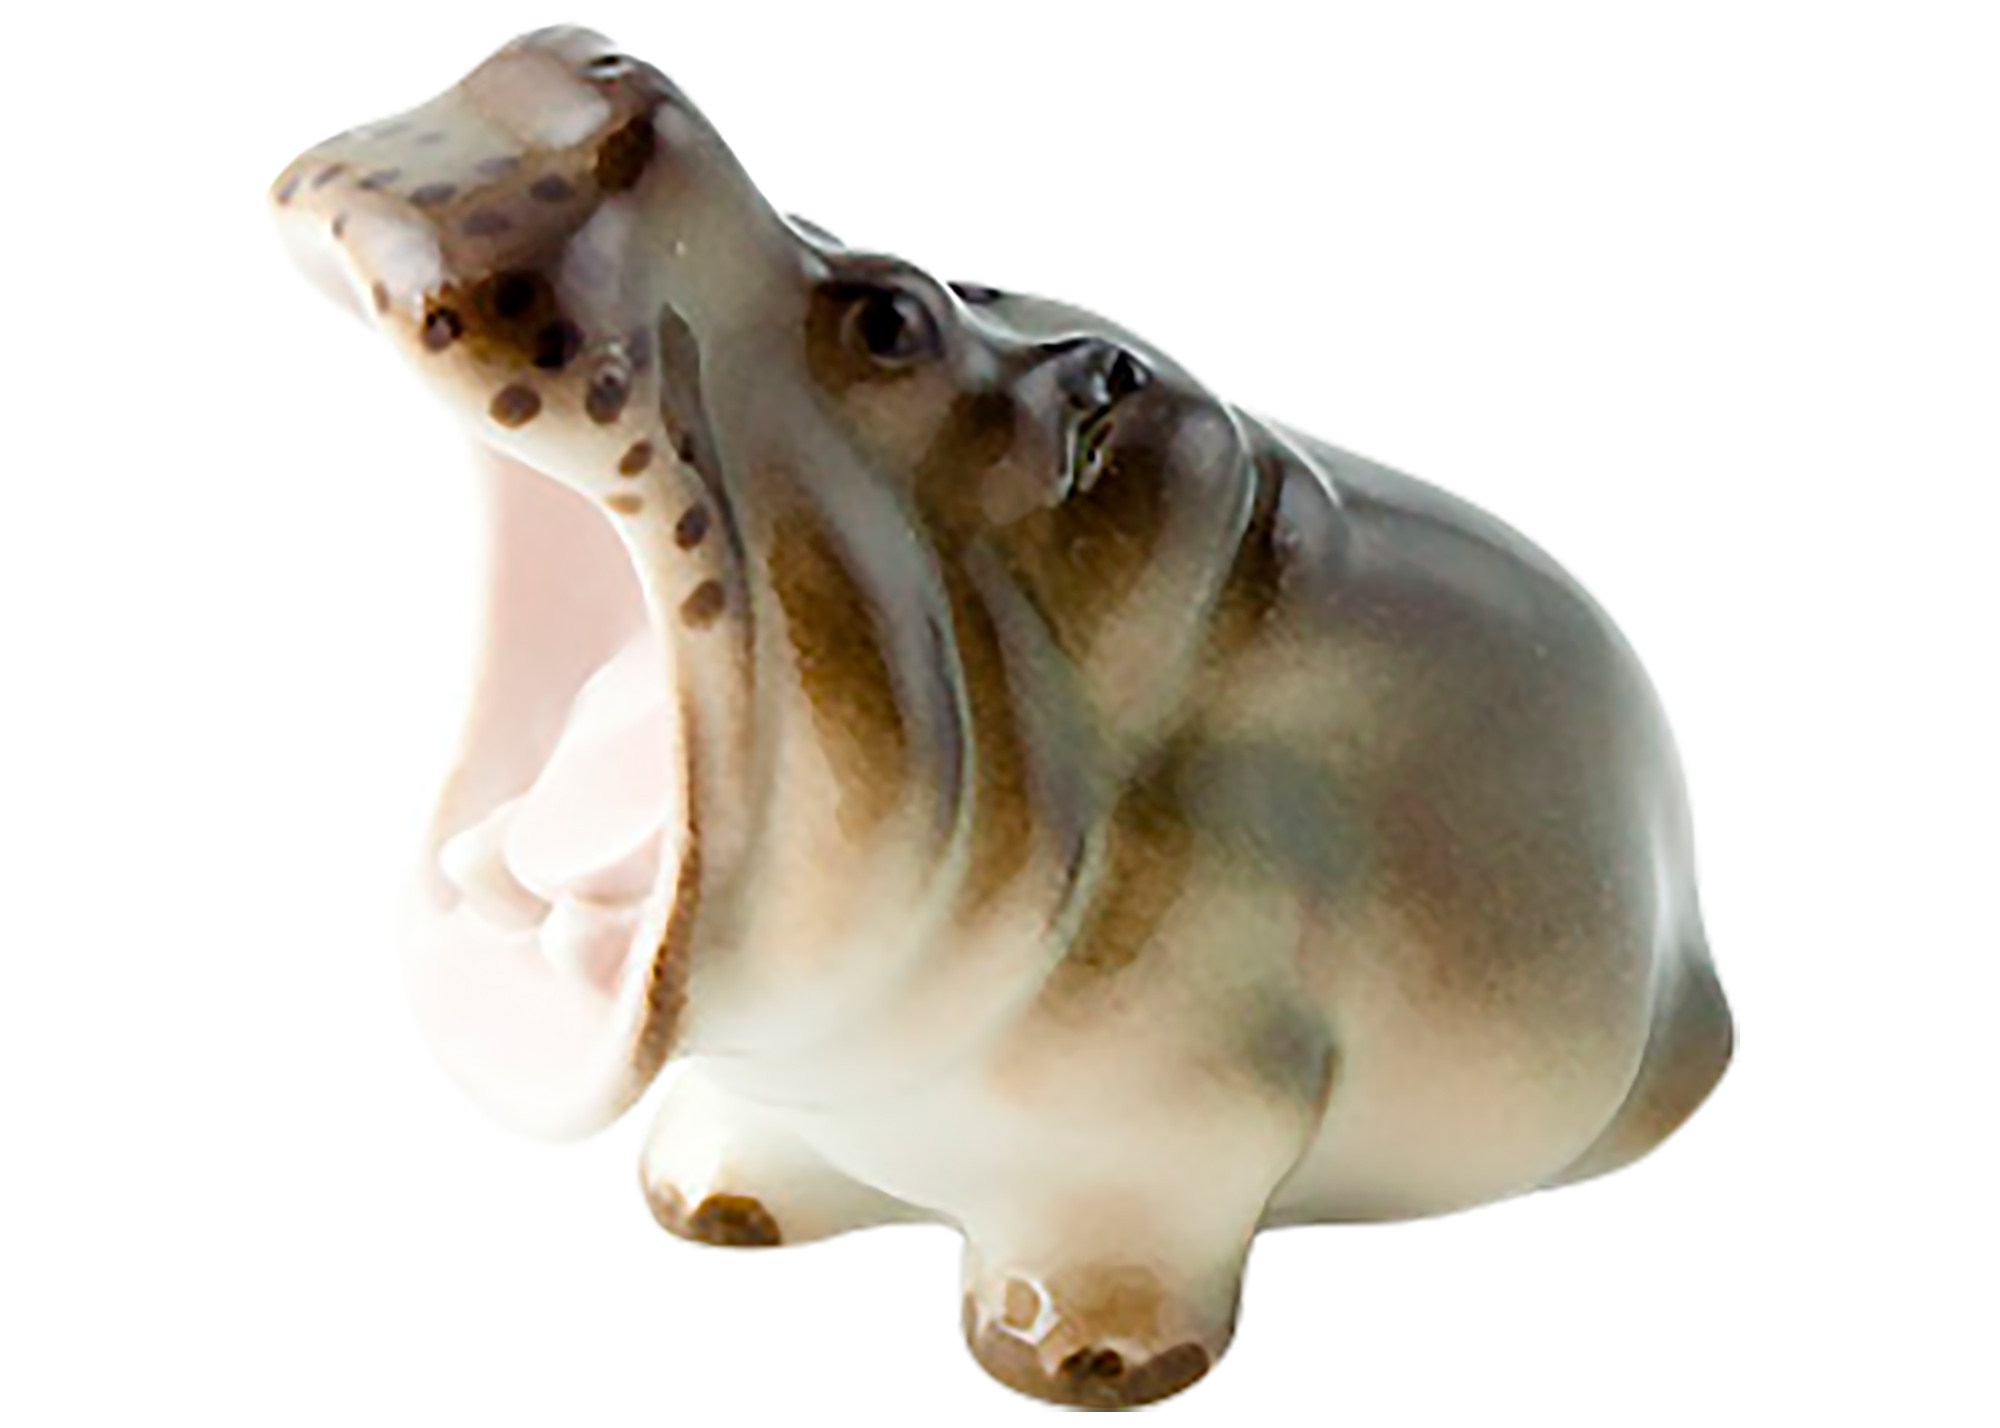 Buy Medium Hippo Figurine at GoldenCockerel.com